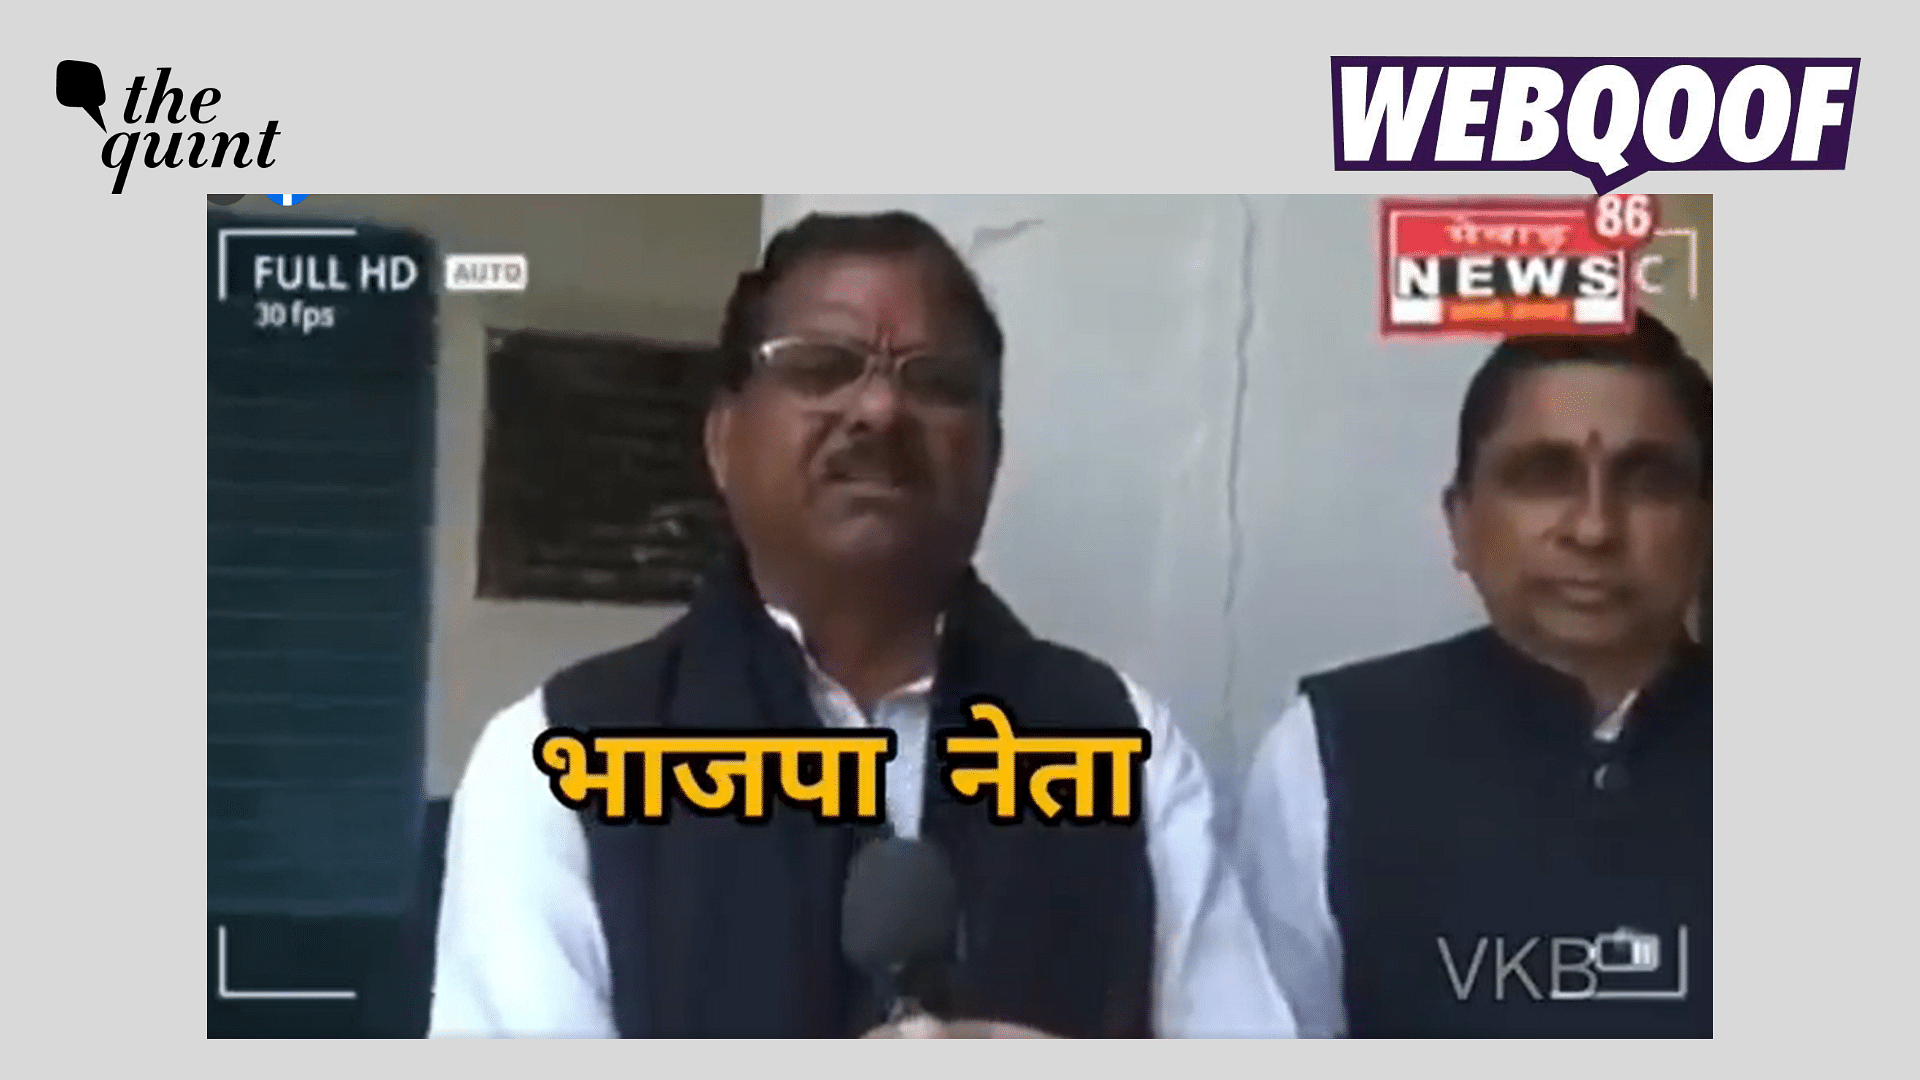 <div class="paragraphs"><p>Fact-check| The video shows Congress leader&nbsp;Raghuveer Singh Meena.</p></div>